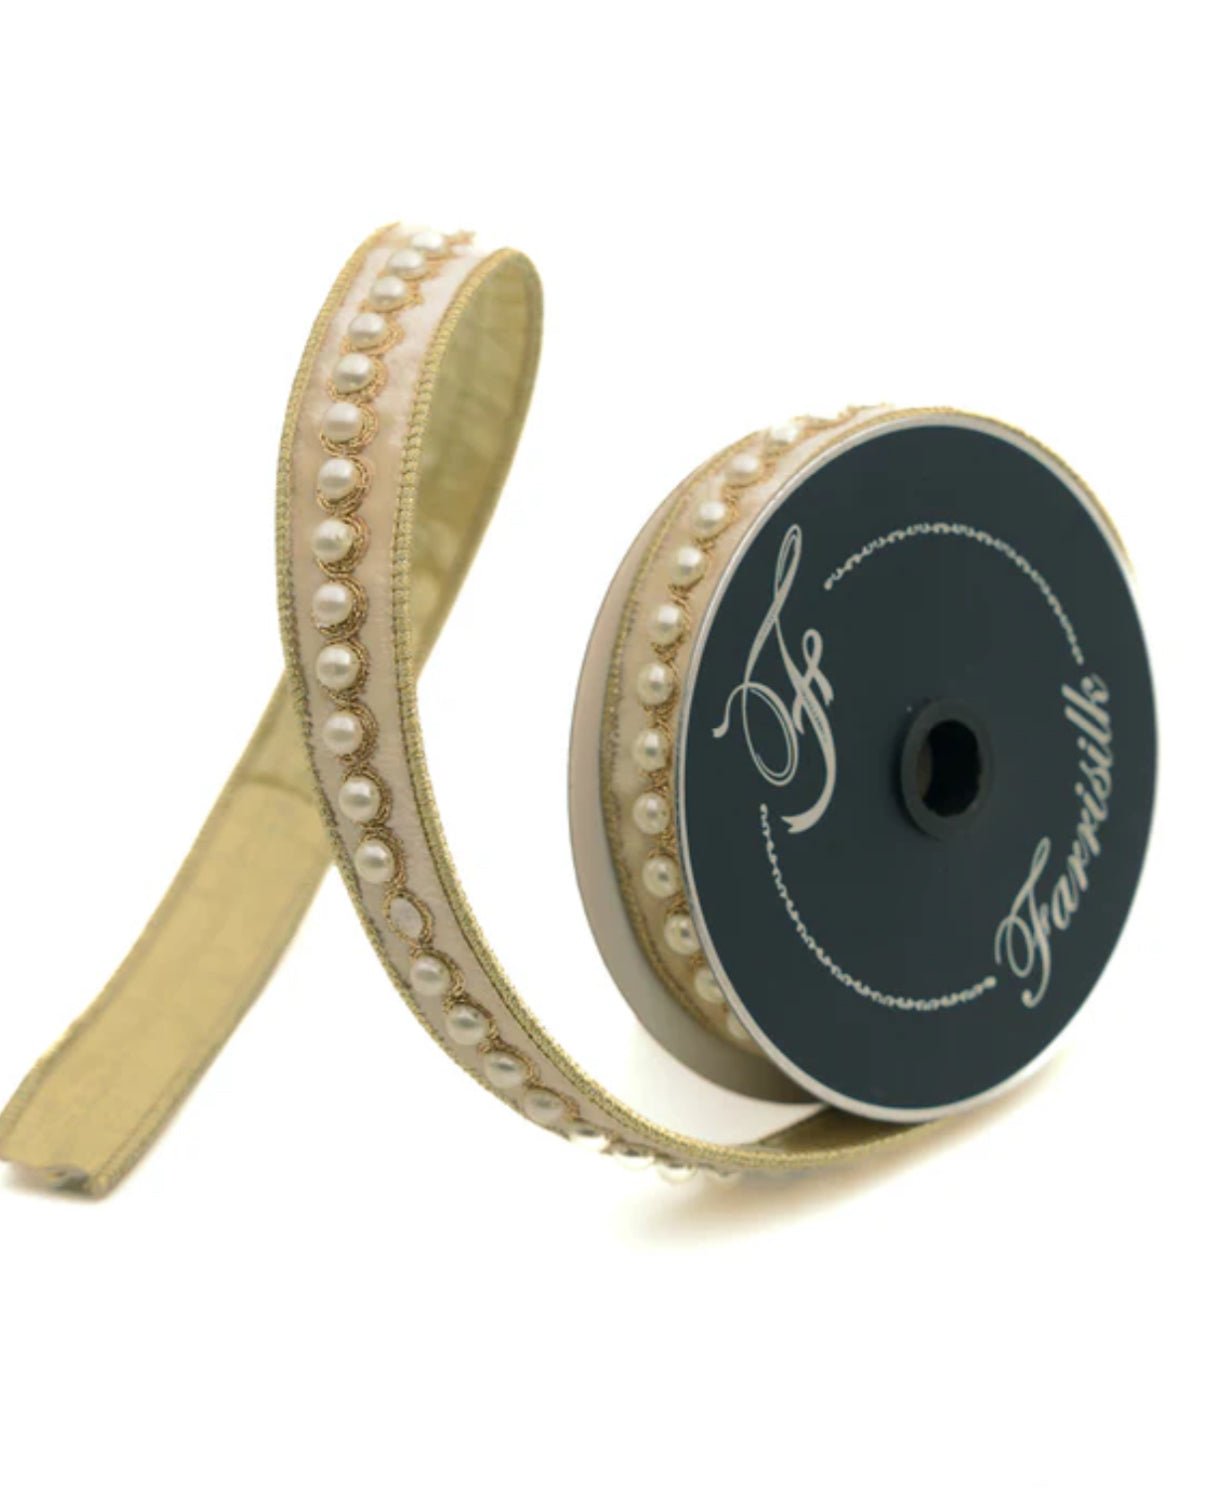 Farrisilk pearl border in cream velvet ribbon - 1” - Greenery Marketwired ribbonRK316-01